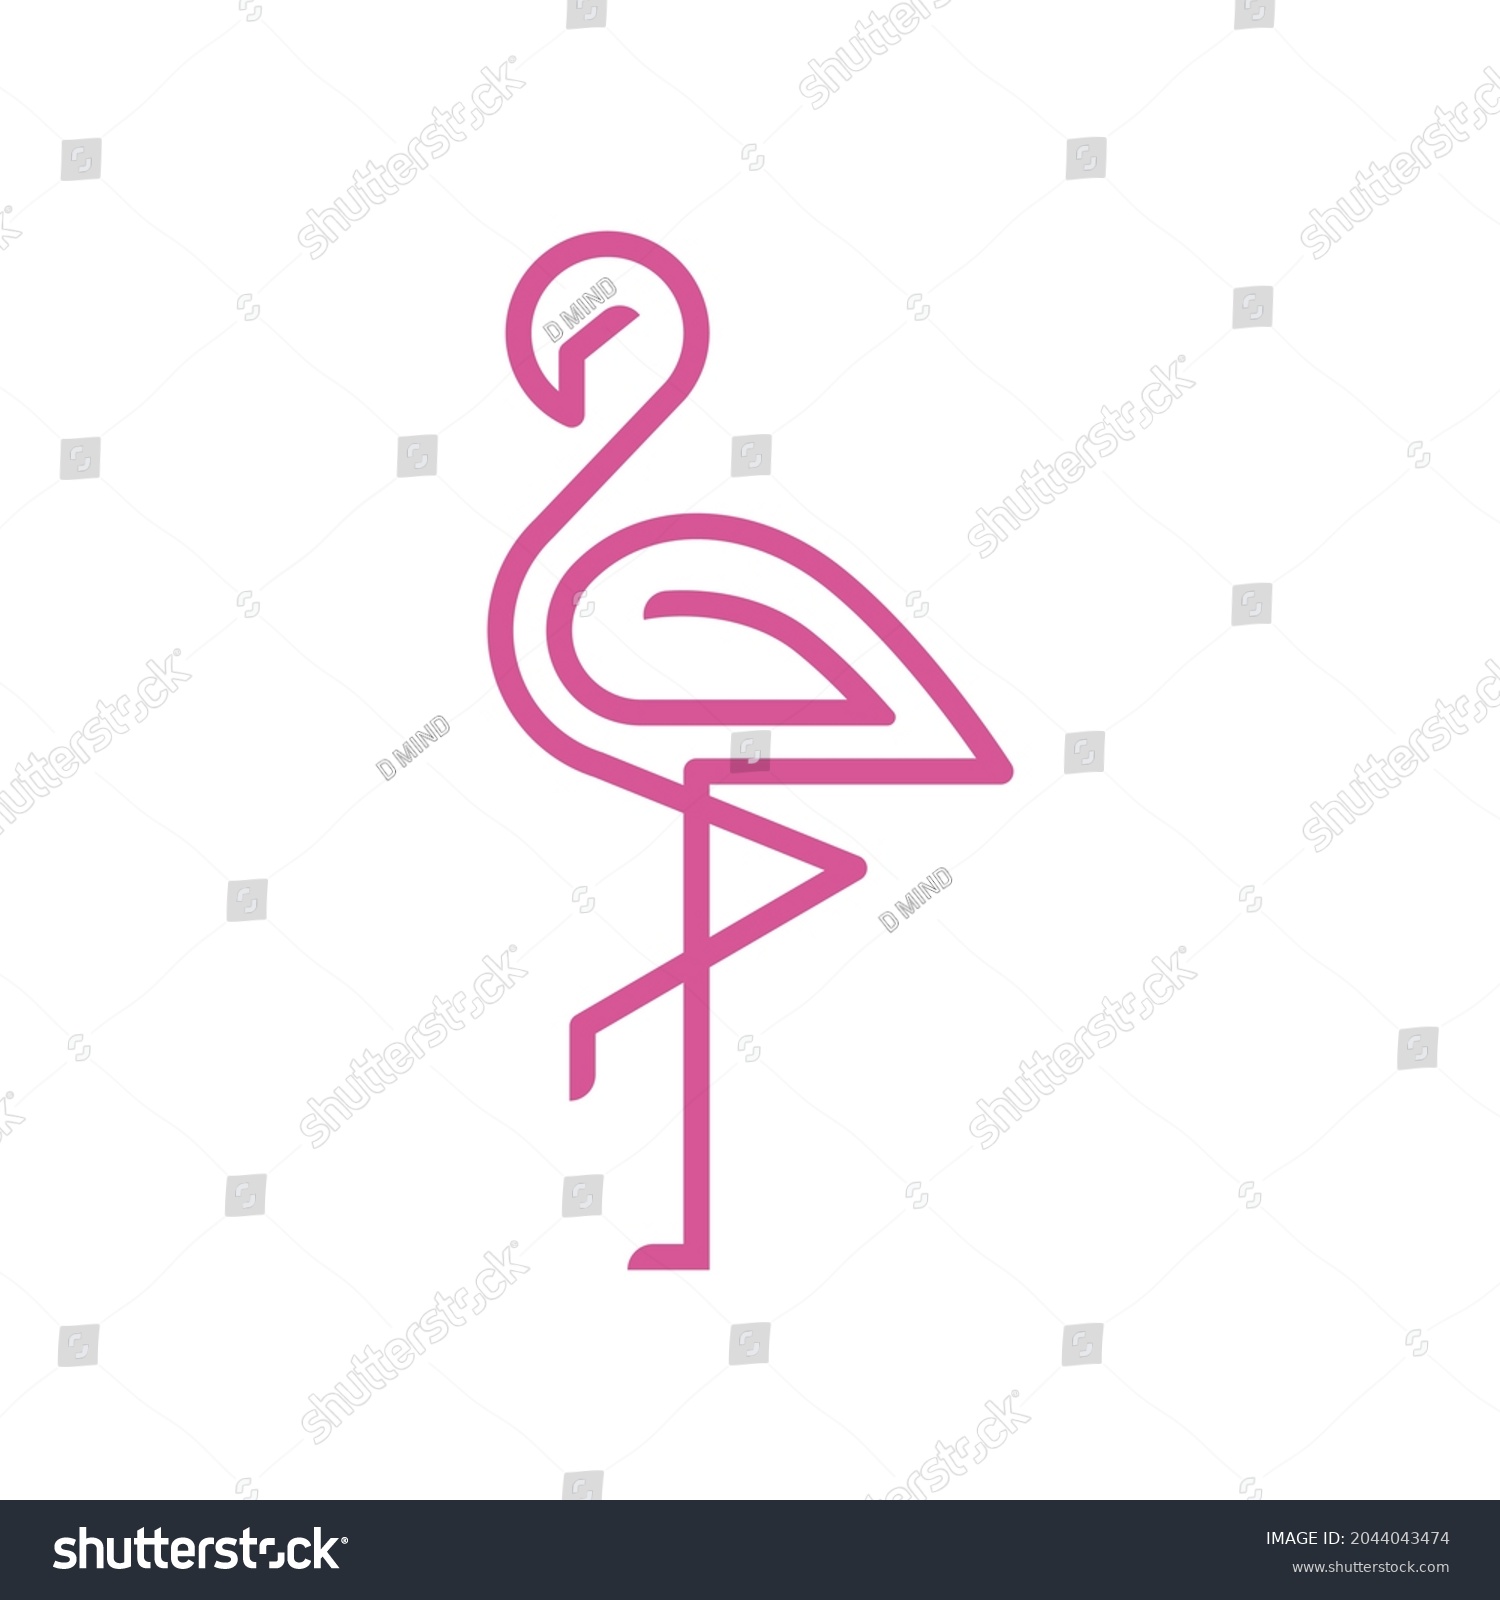 flamingo simple modern logo design #2044043474